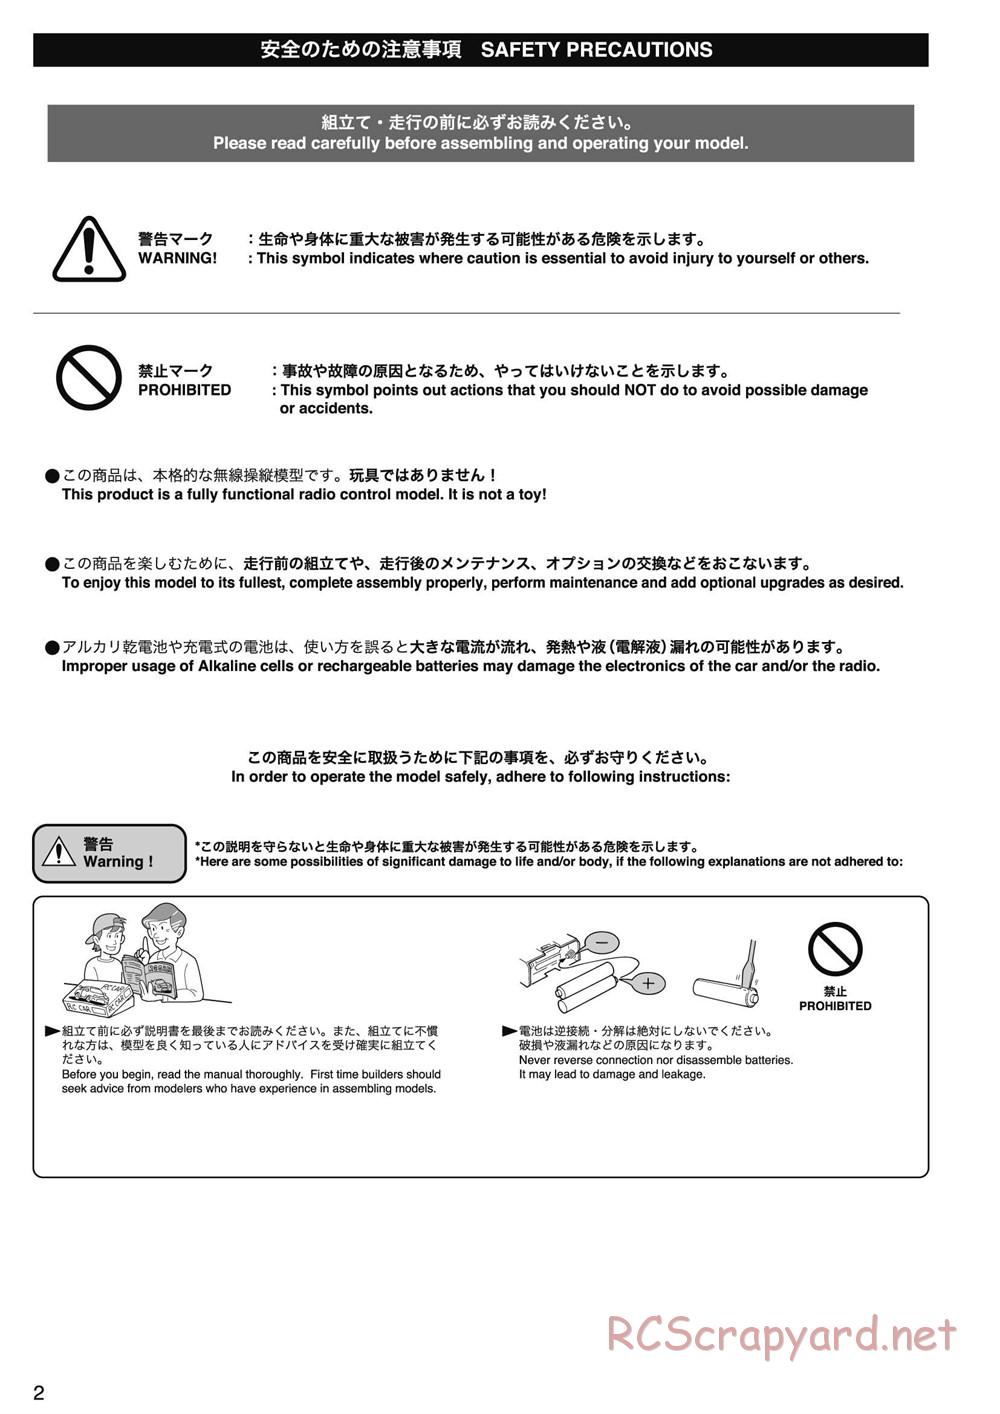 Kyosho - Lazer ZX-5 FS2 SP - Manual - Page 2